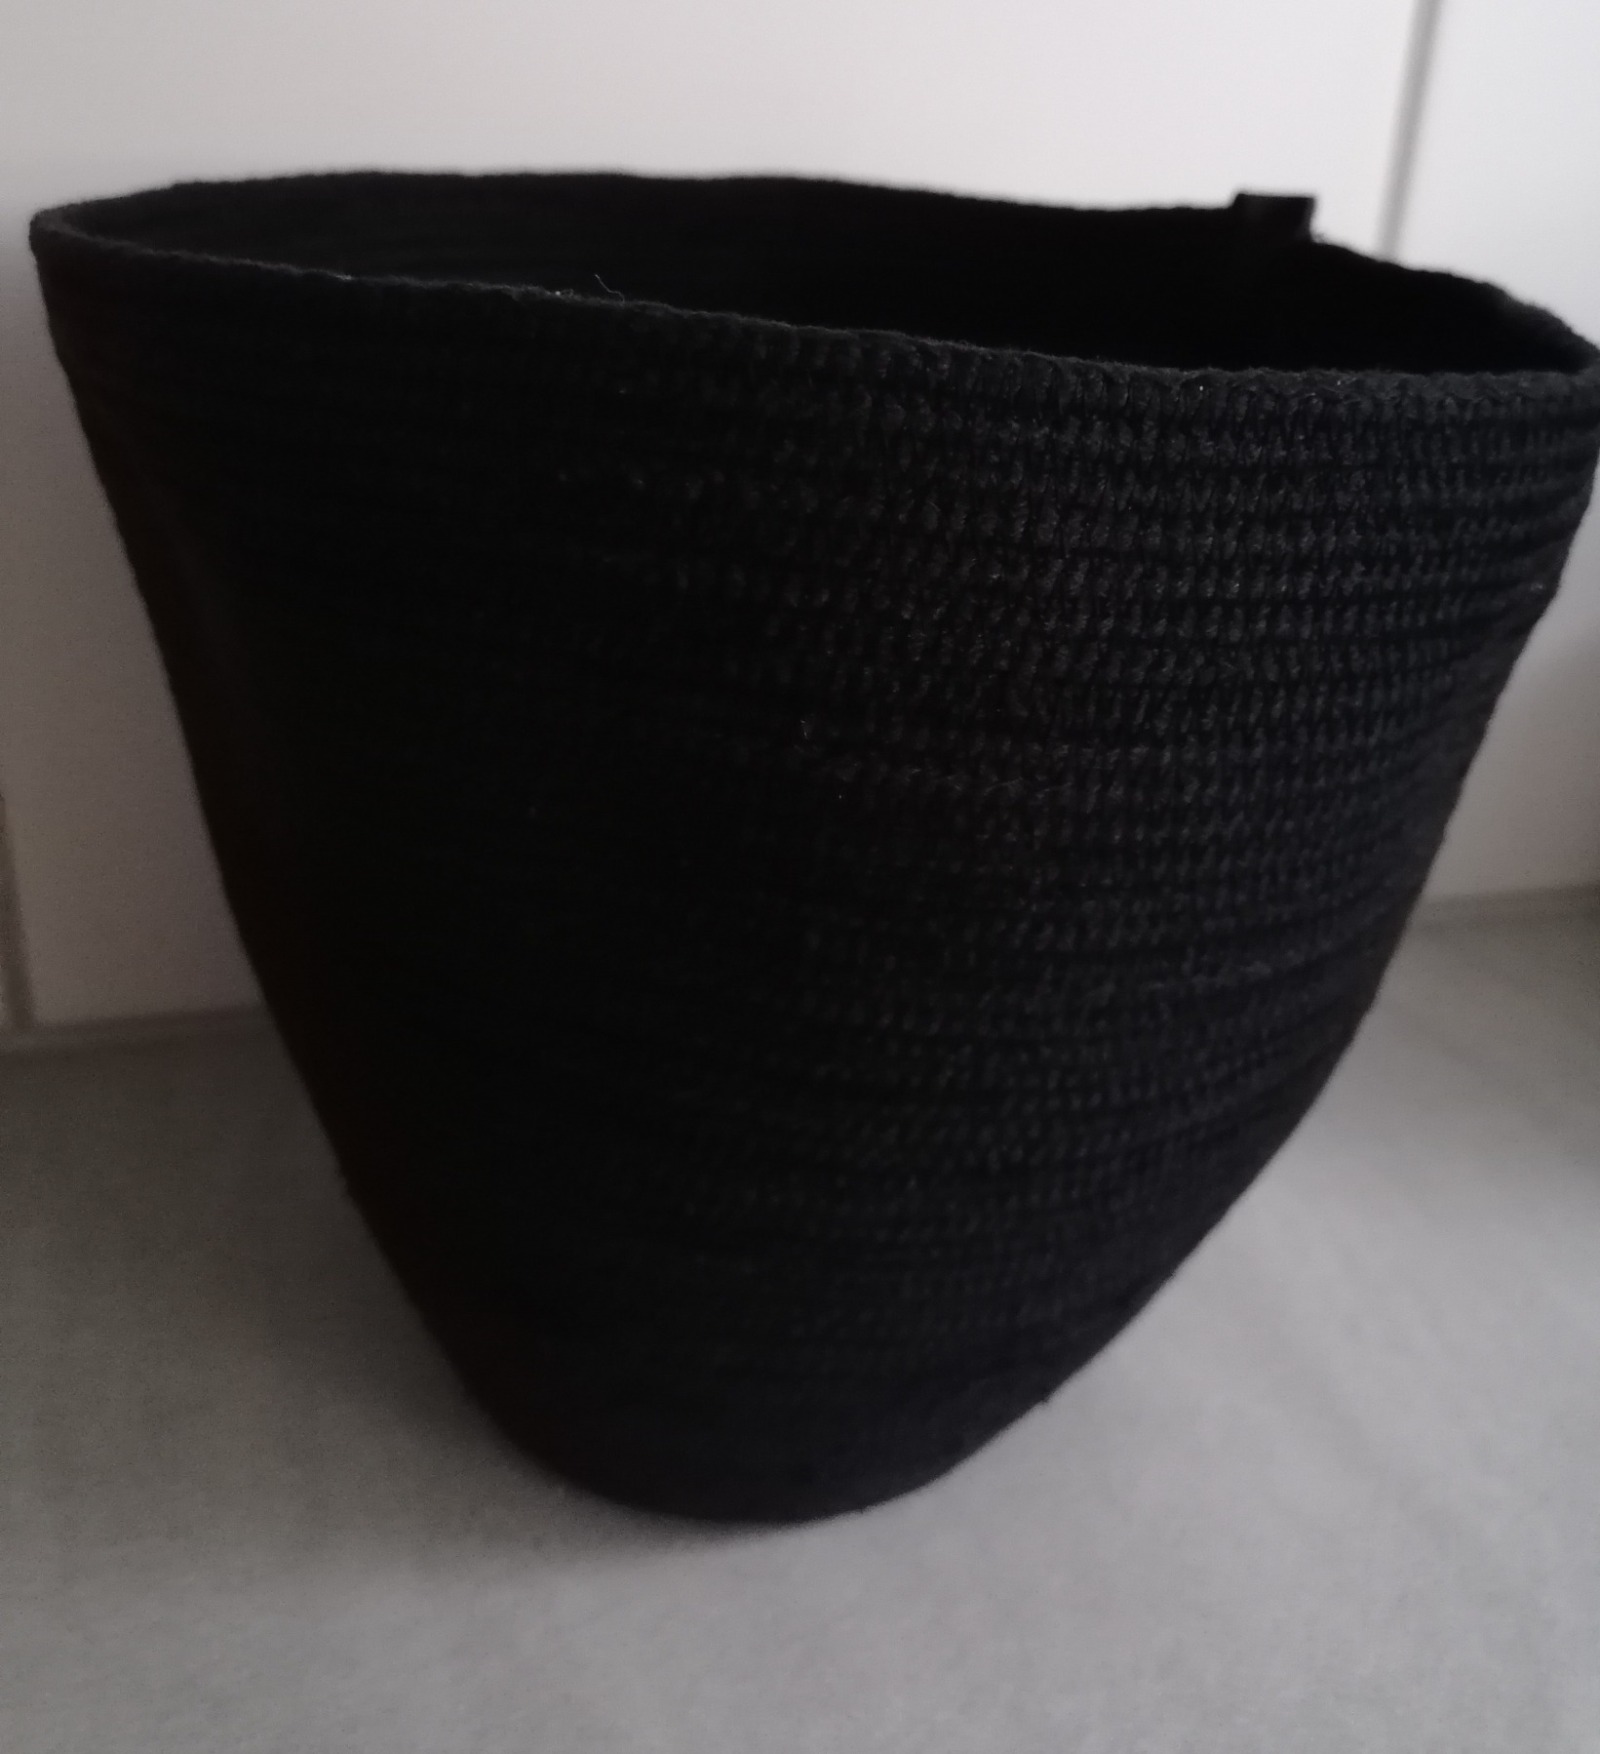 Robe Bowl schwarz 19x20 cm